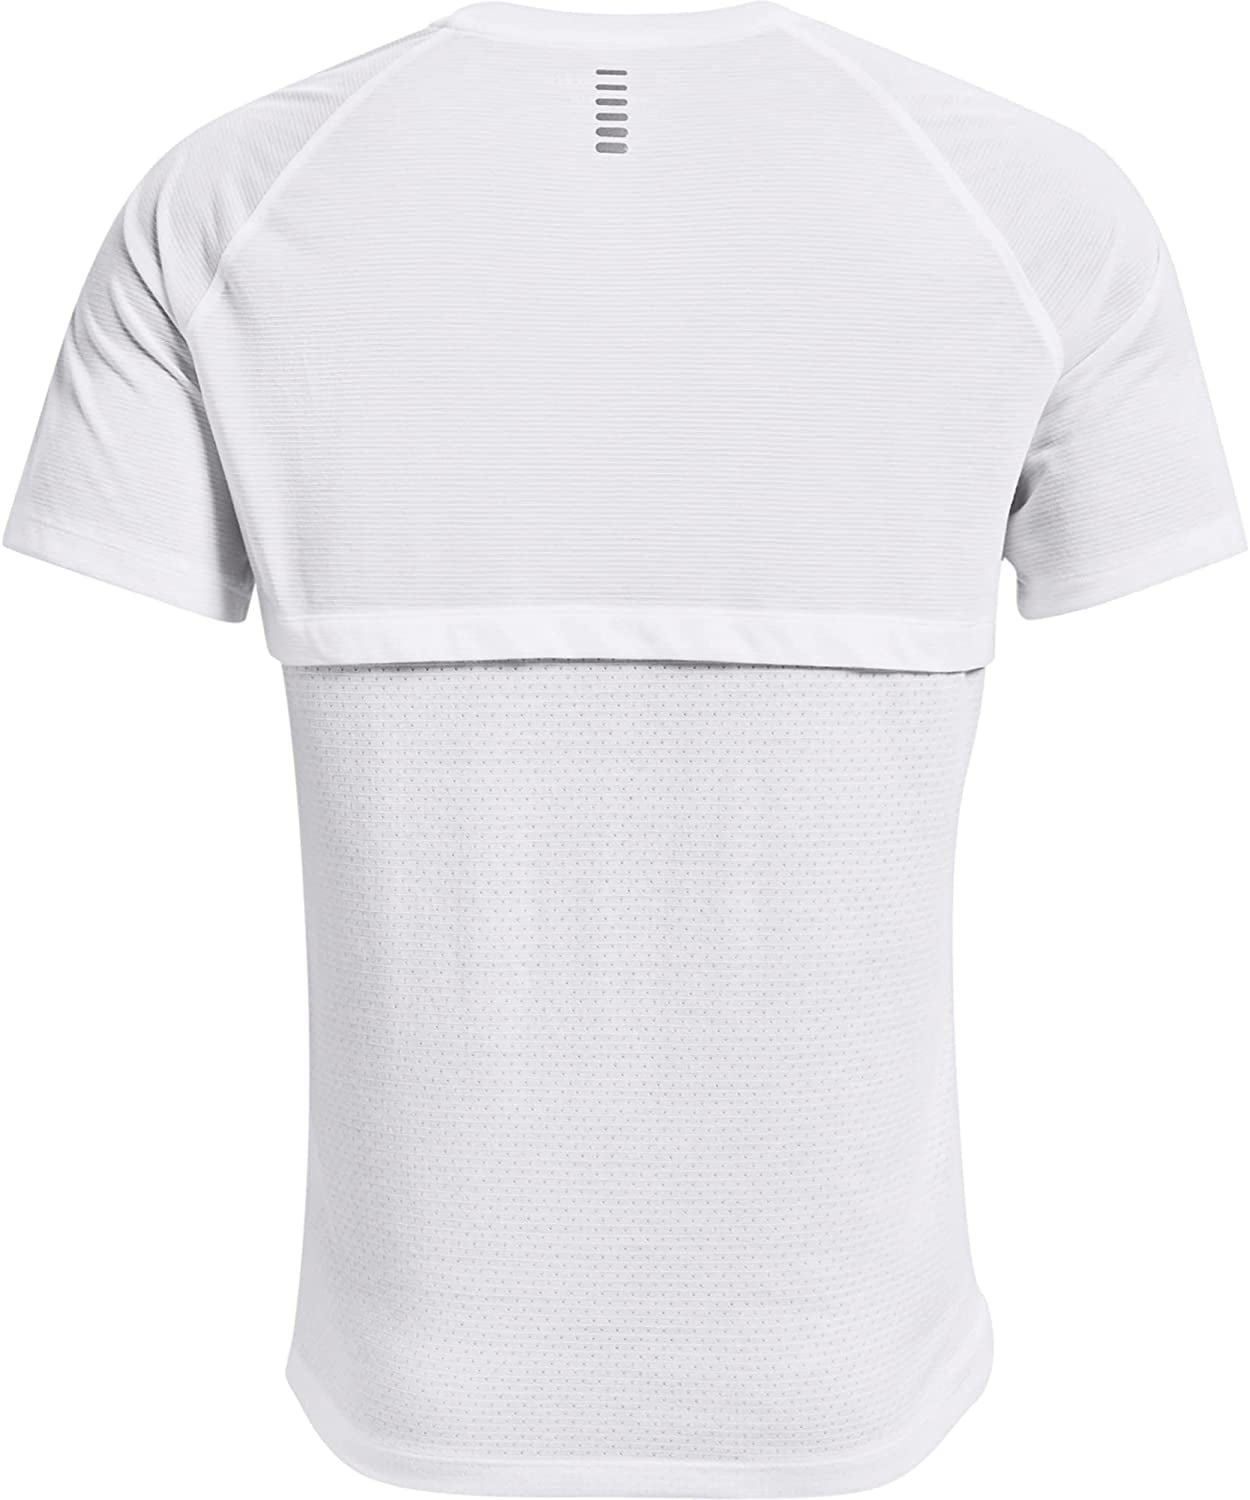 Under Armour Mens Streaker Short-Sleeve T-Shirt White 100/Reflective Large